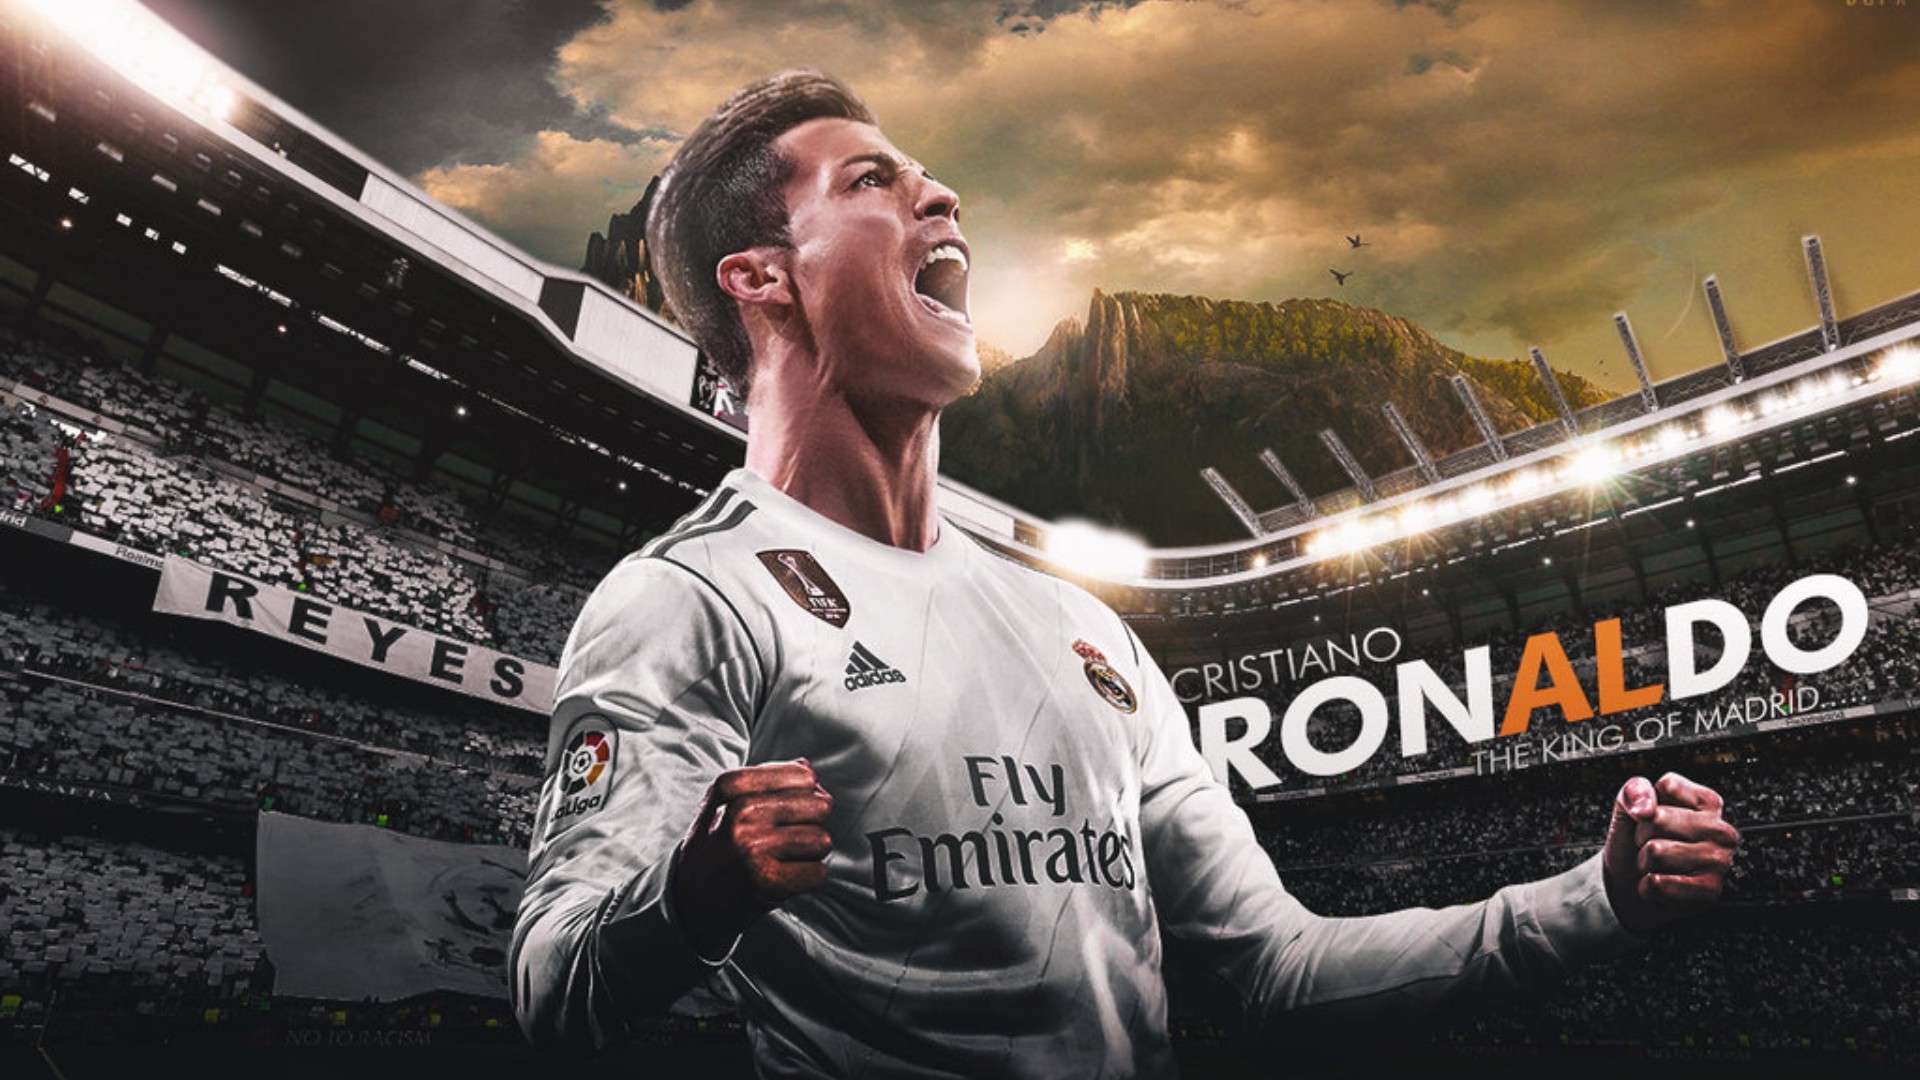 Ronaldo Wallpapers - Top 78 Best Cristiano Ronaldo Wallpapers [ HQ ]